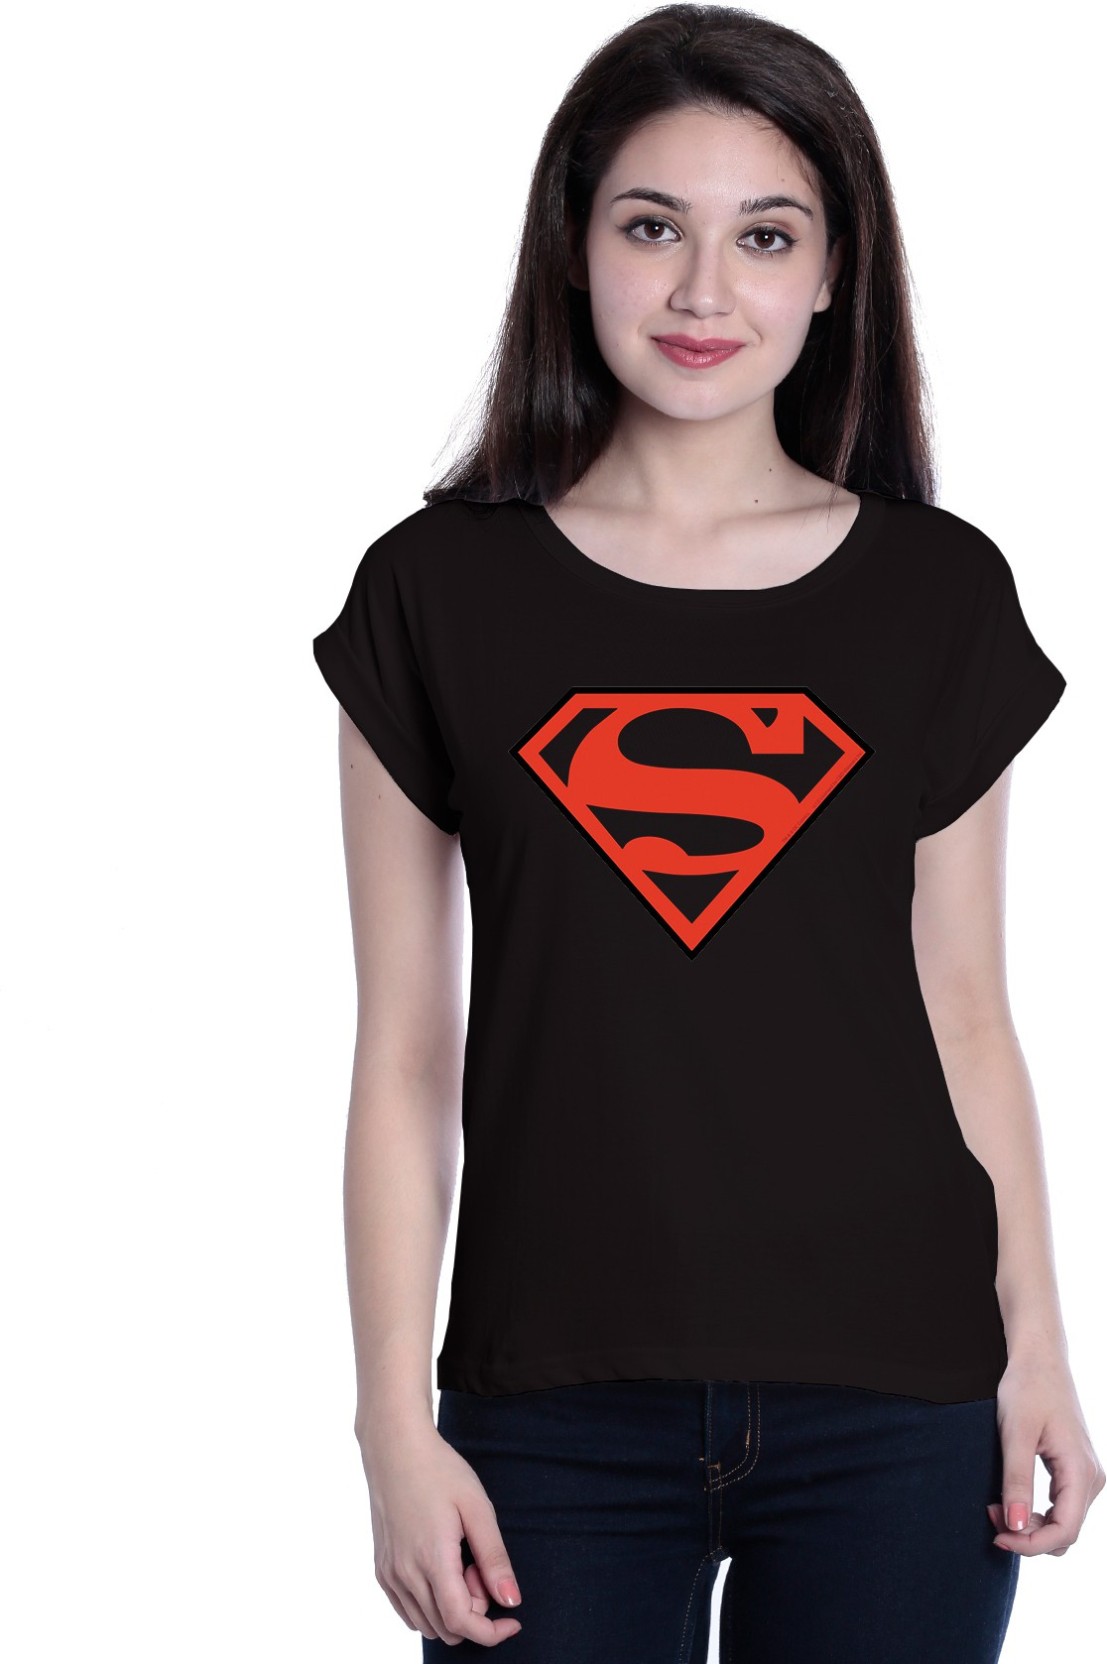 Superhero Shirts For Girl Ortsplanungsrevision Stadt Thun - best roblox girl shirts ortsplanungsrevision stadt thun